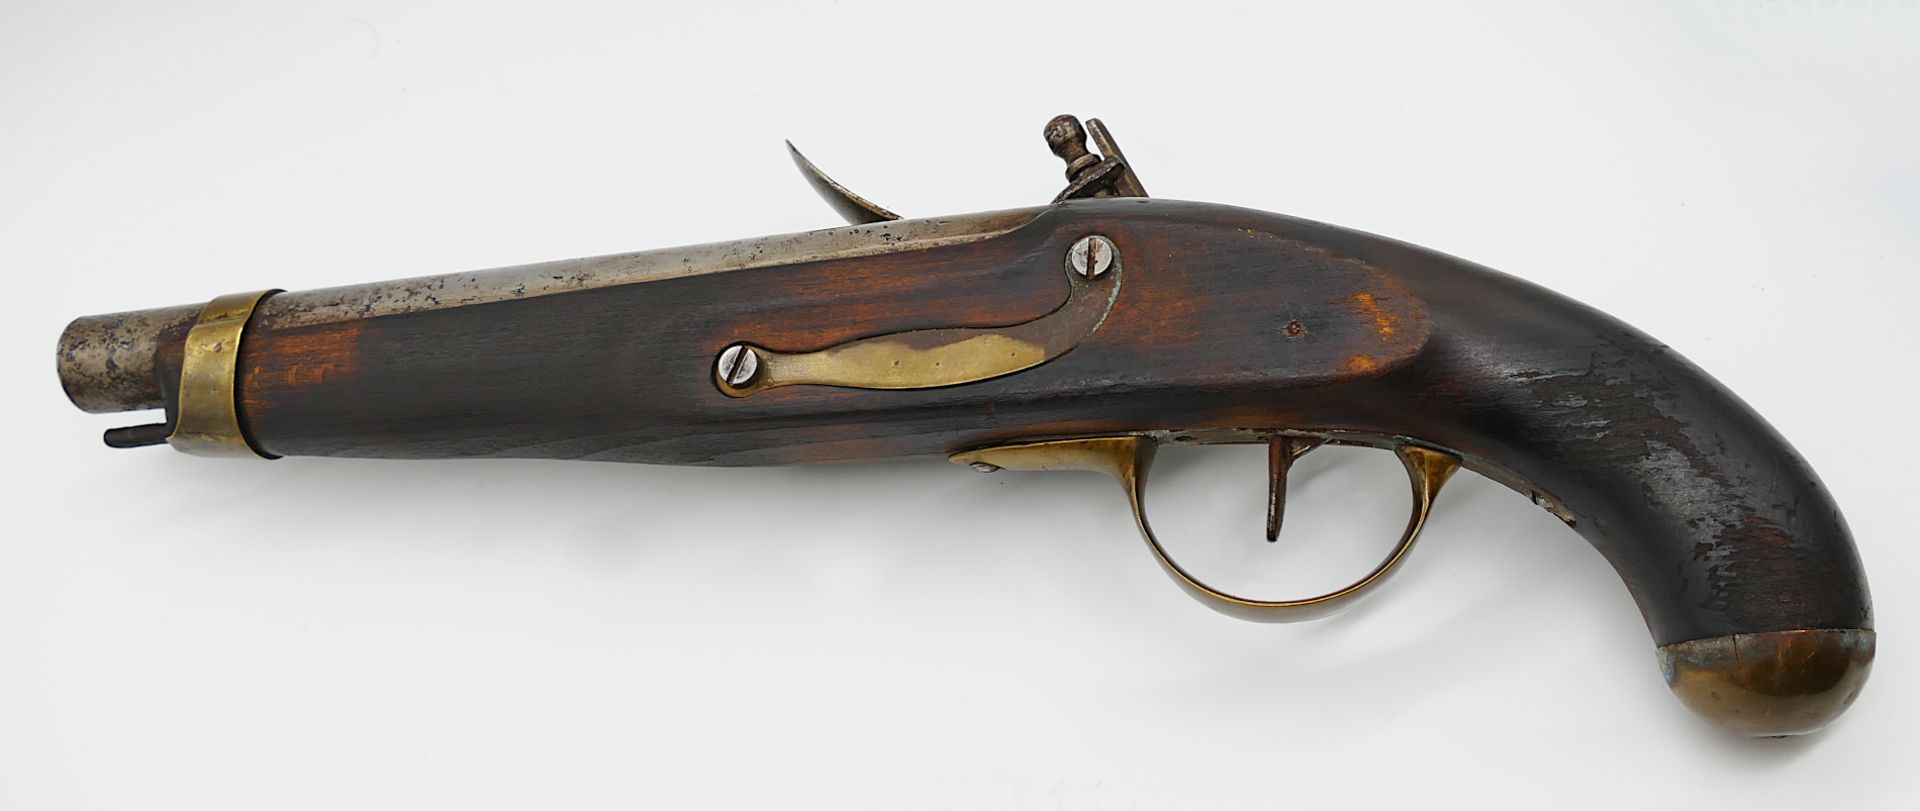 1 Steinschlosspistole wohl 19. Jh. Holz mit Messing-/Metallappliken, ca. L 43cm, z.T. besch. (Rost, - Image 4 of 4